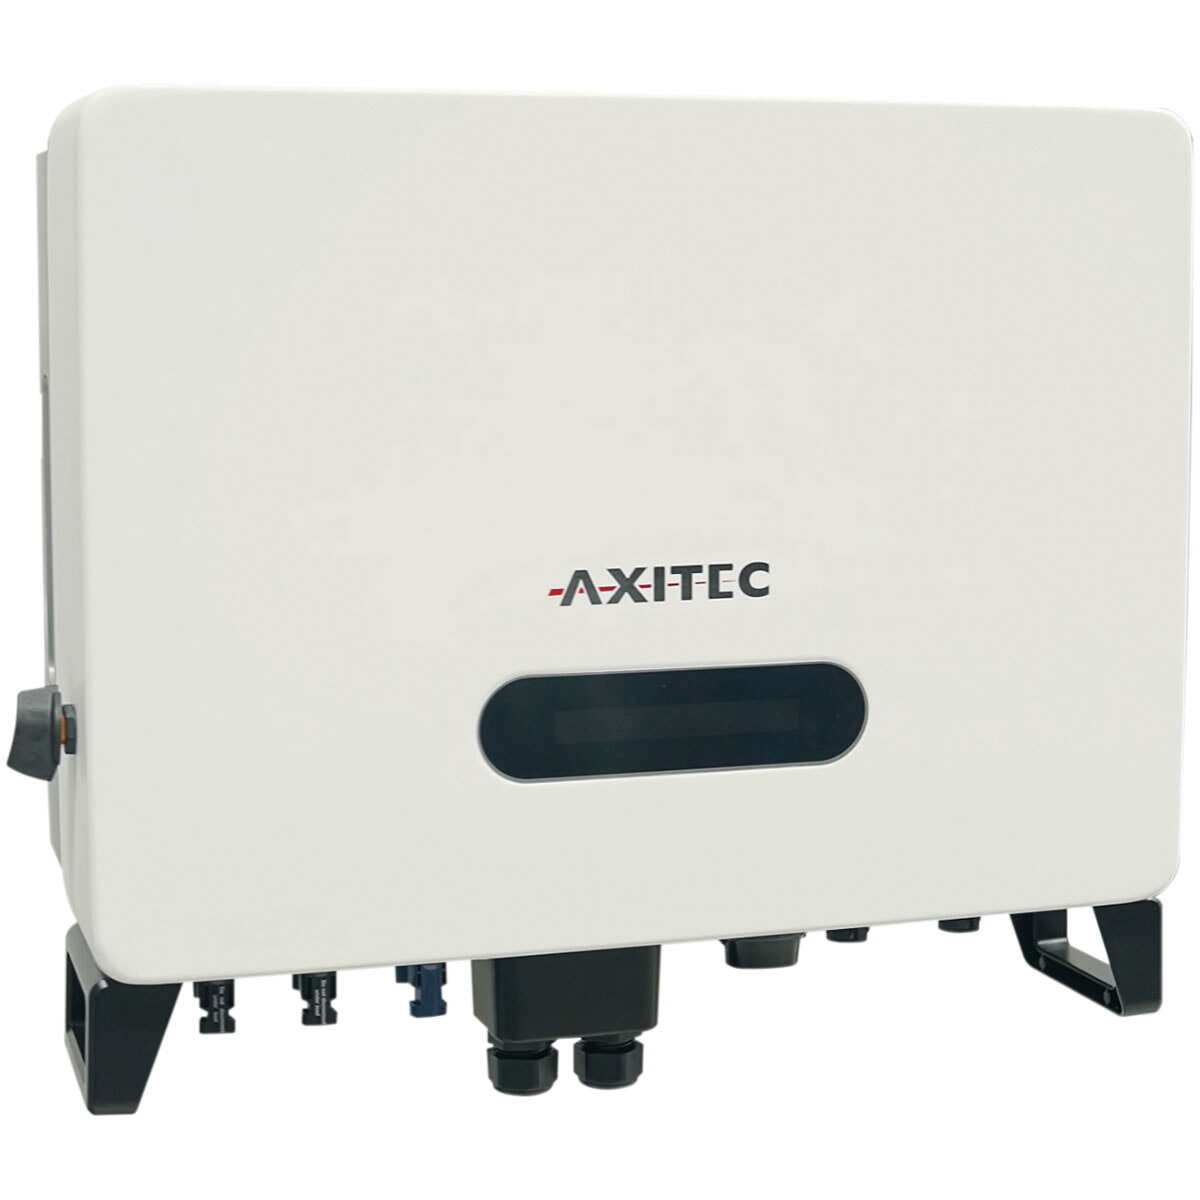 AXITEC Axihycon 5H Hybrid-Wechselrichter, 3-Phasig